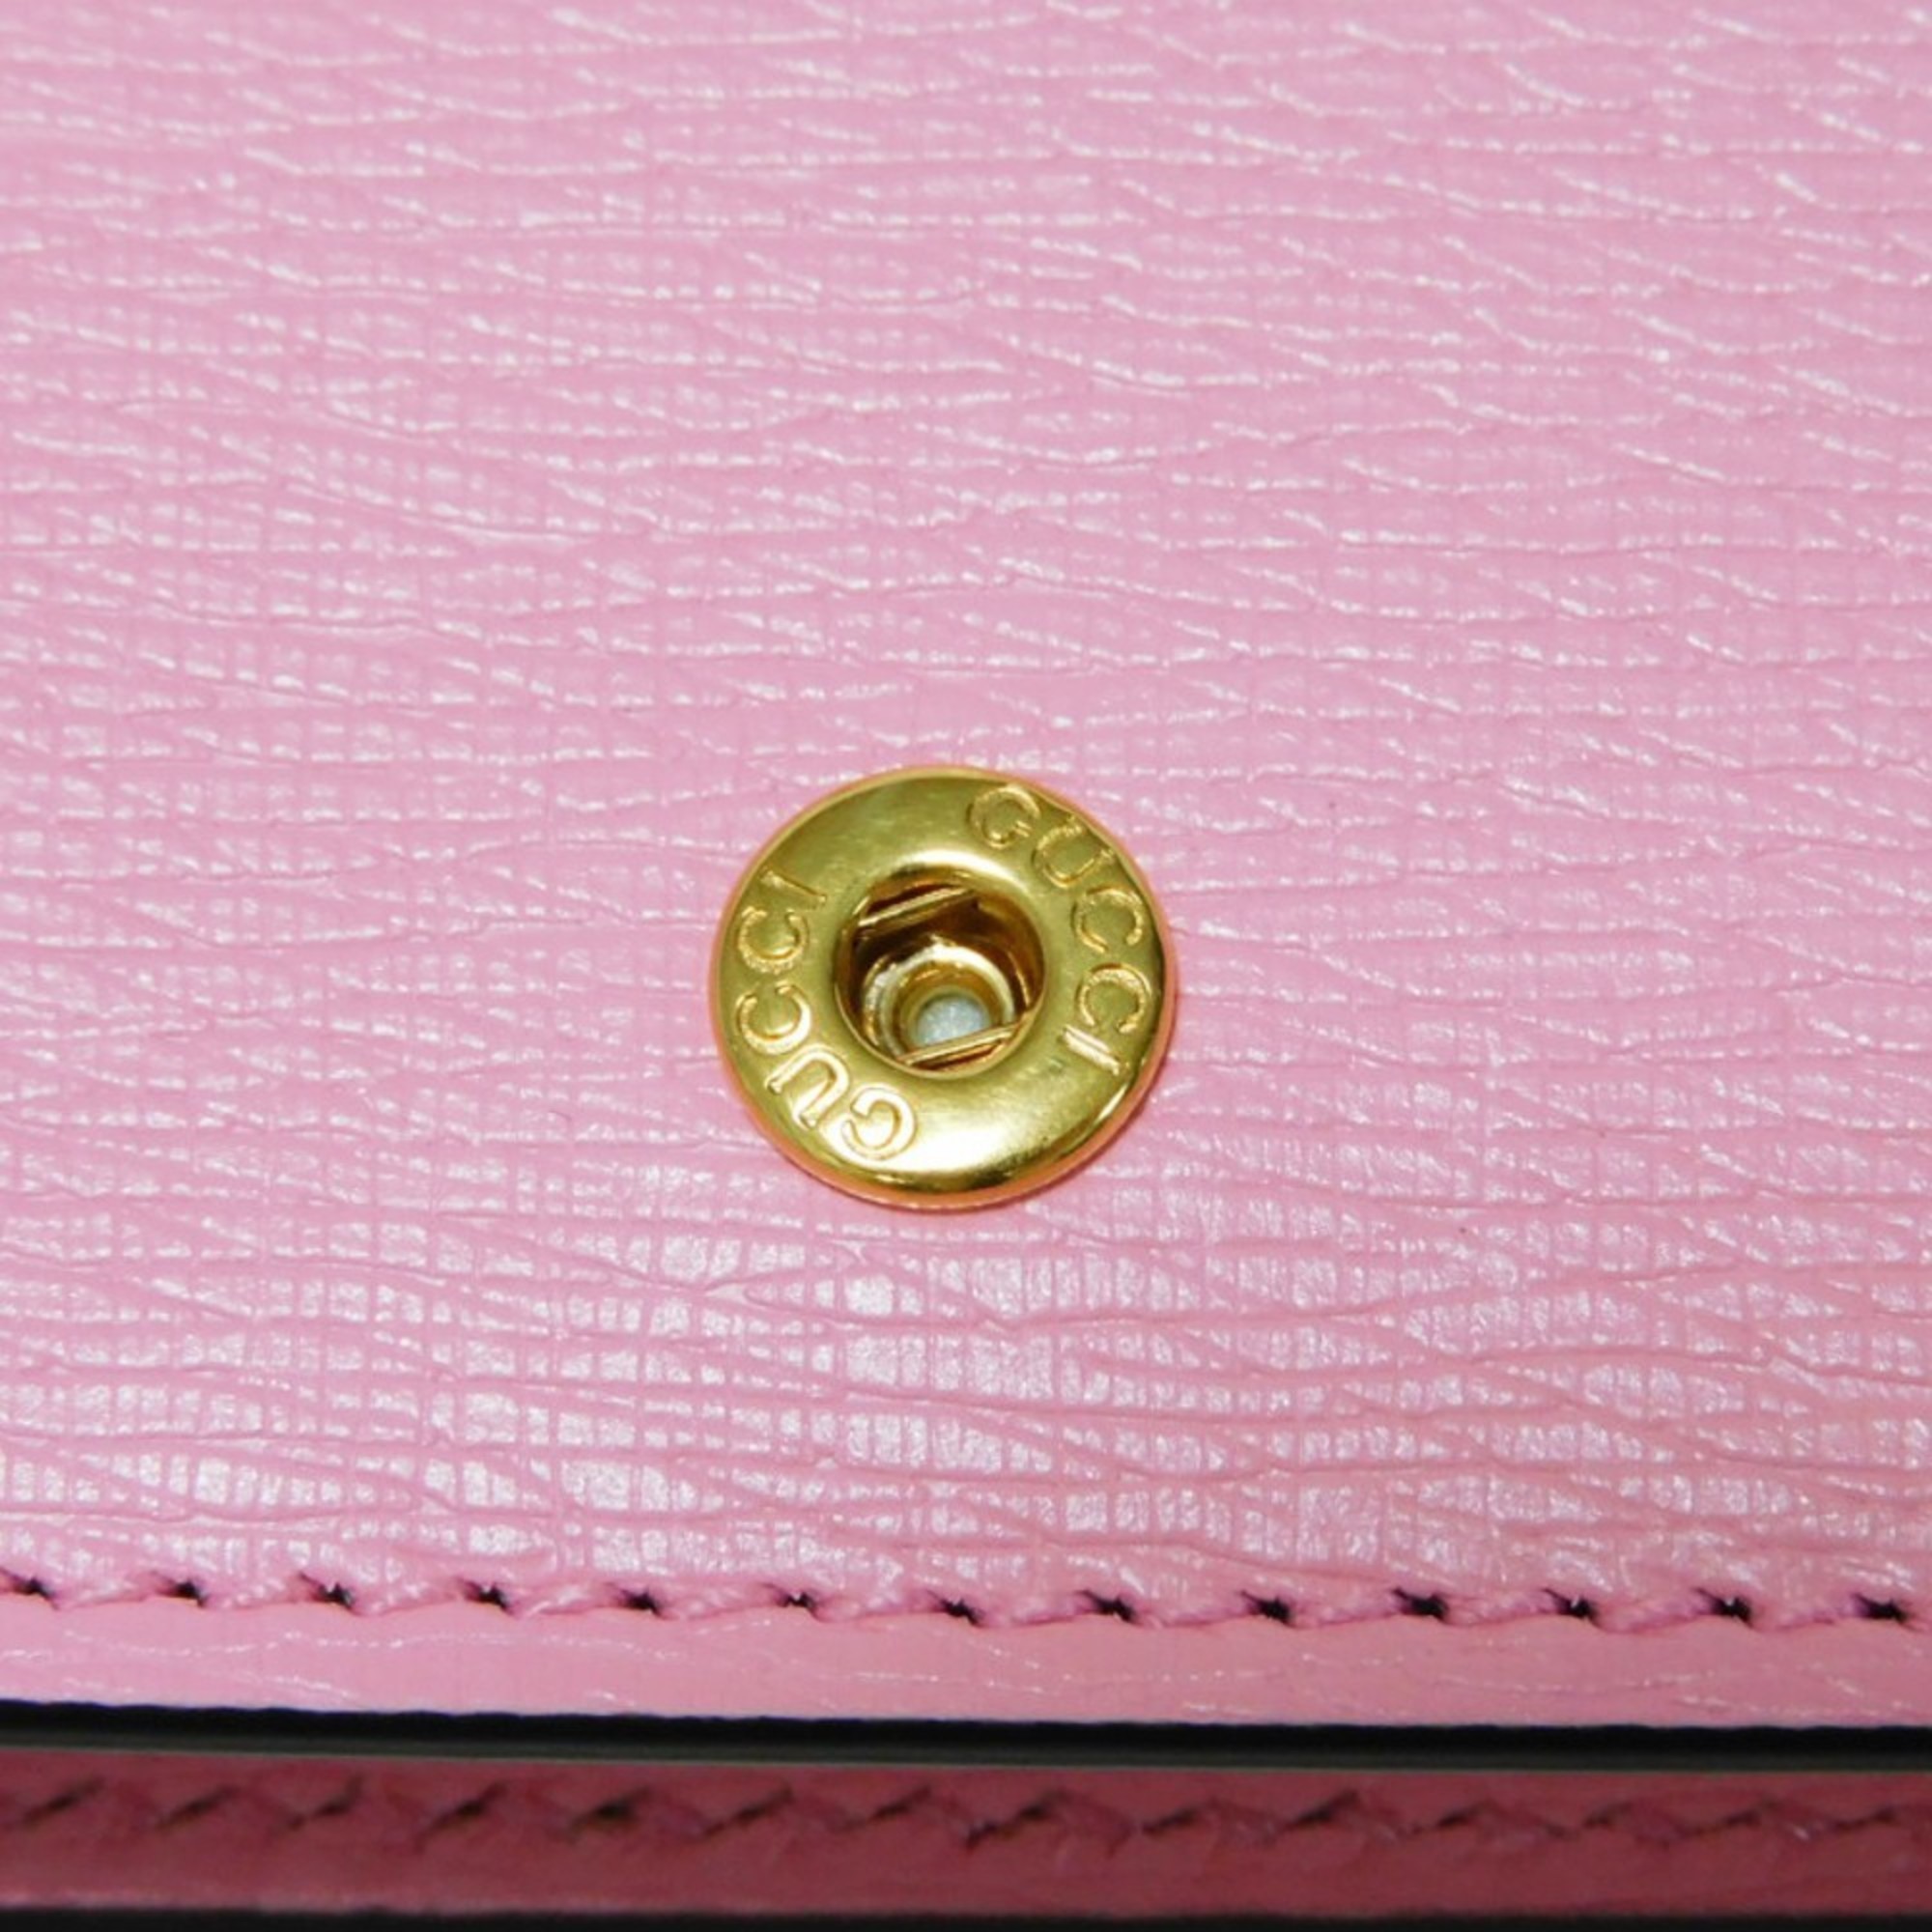 GUCCI Bifold Wallet Bananya Compact Banana Lightning Bolt Pastel Pink Light 701009 Women's